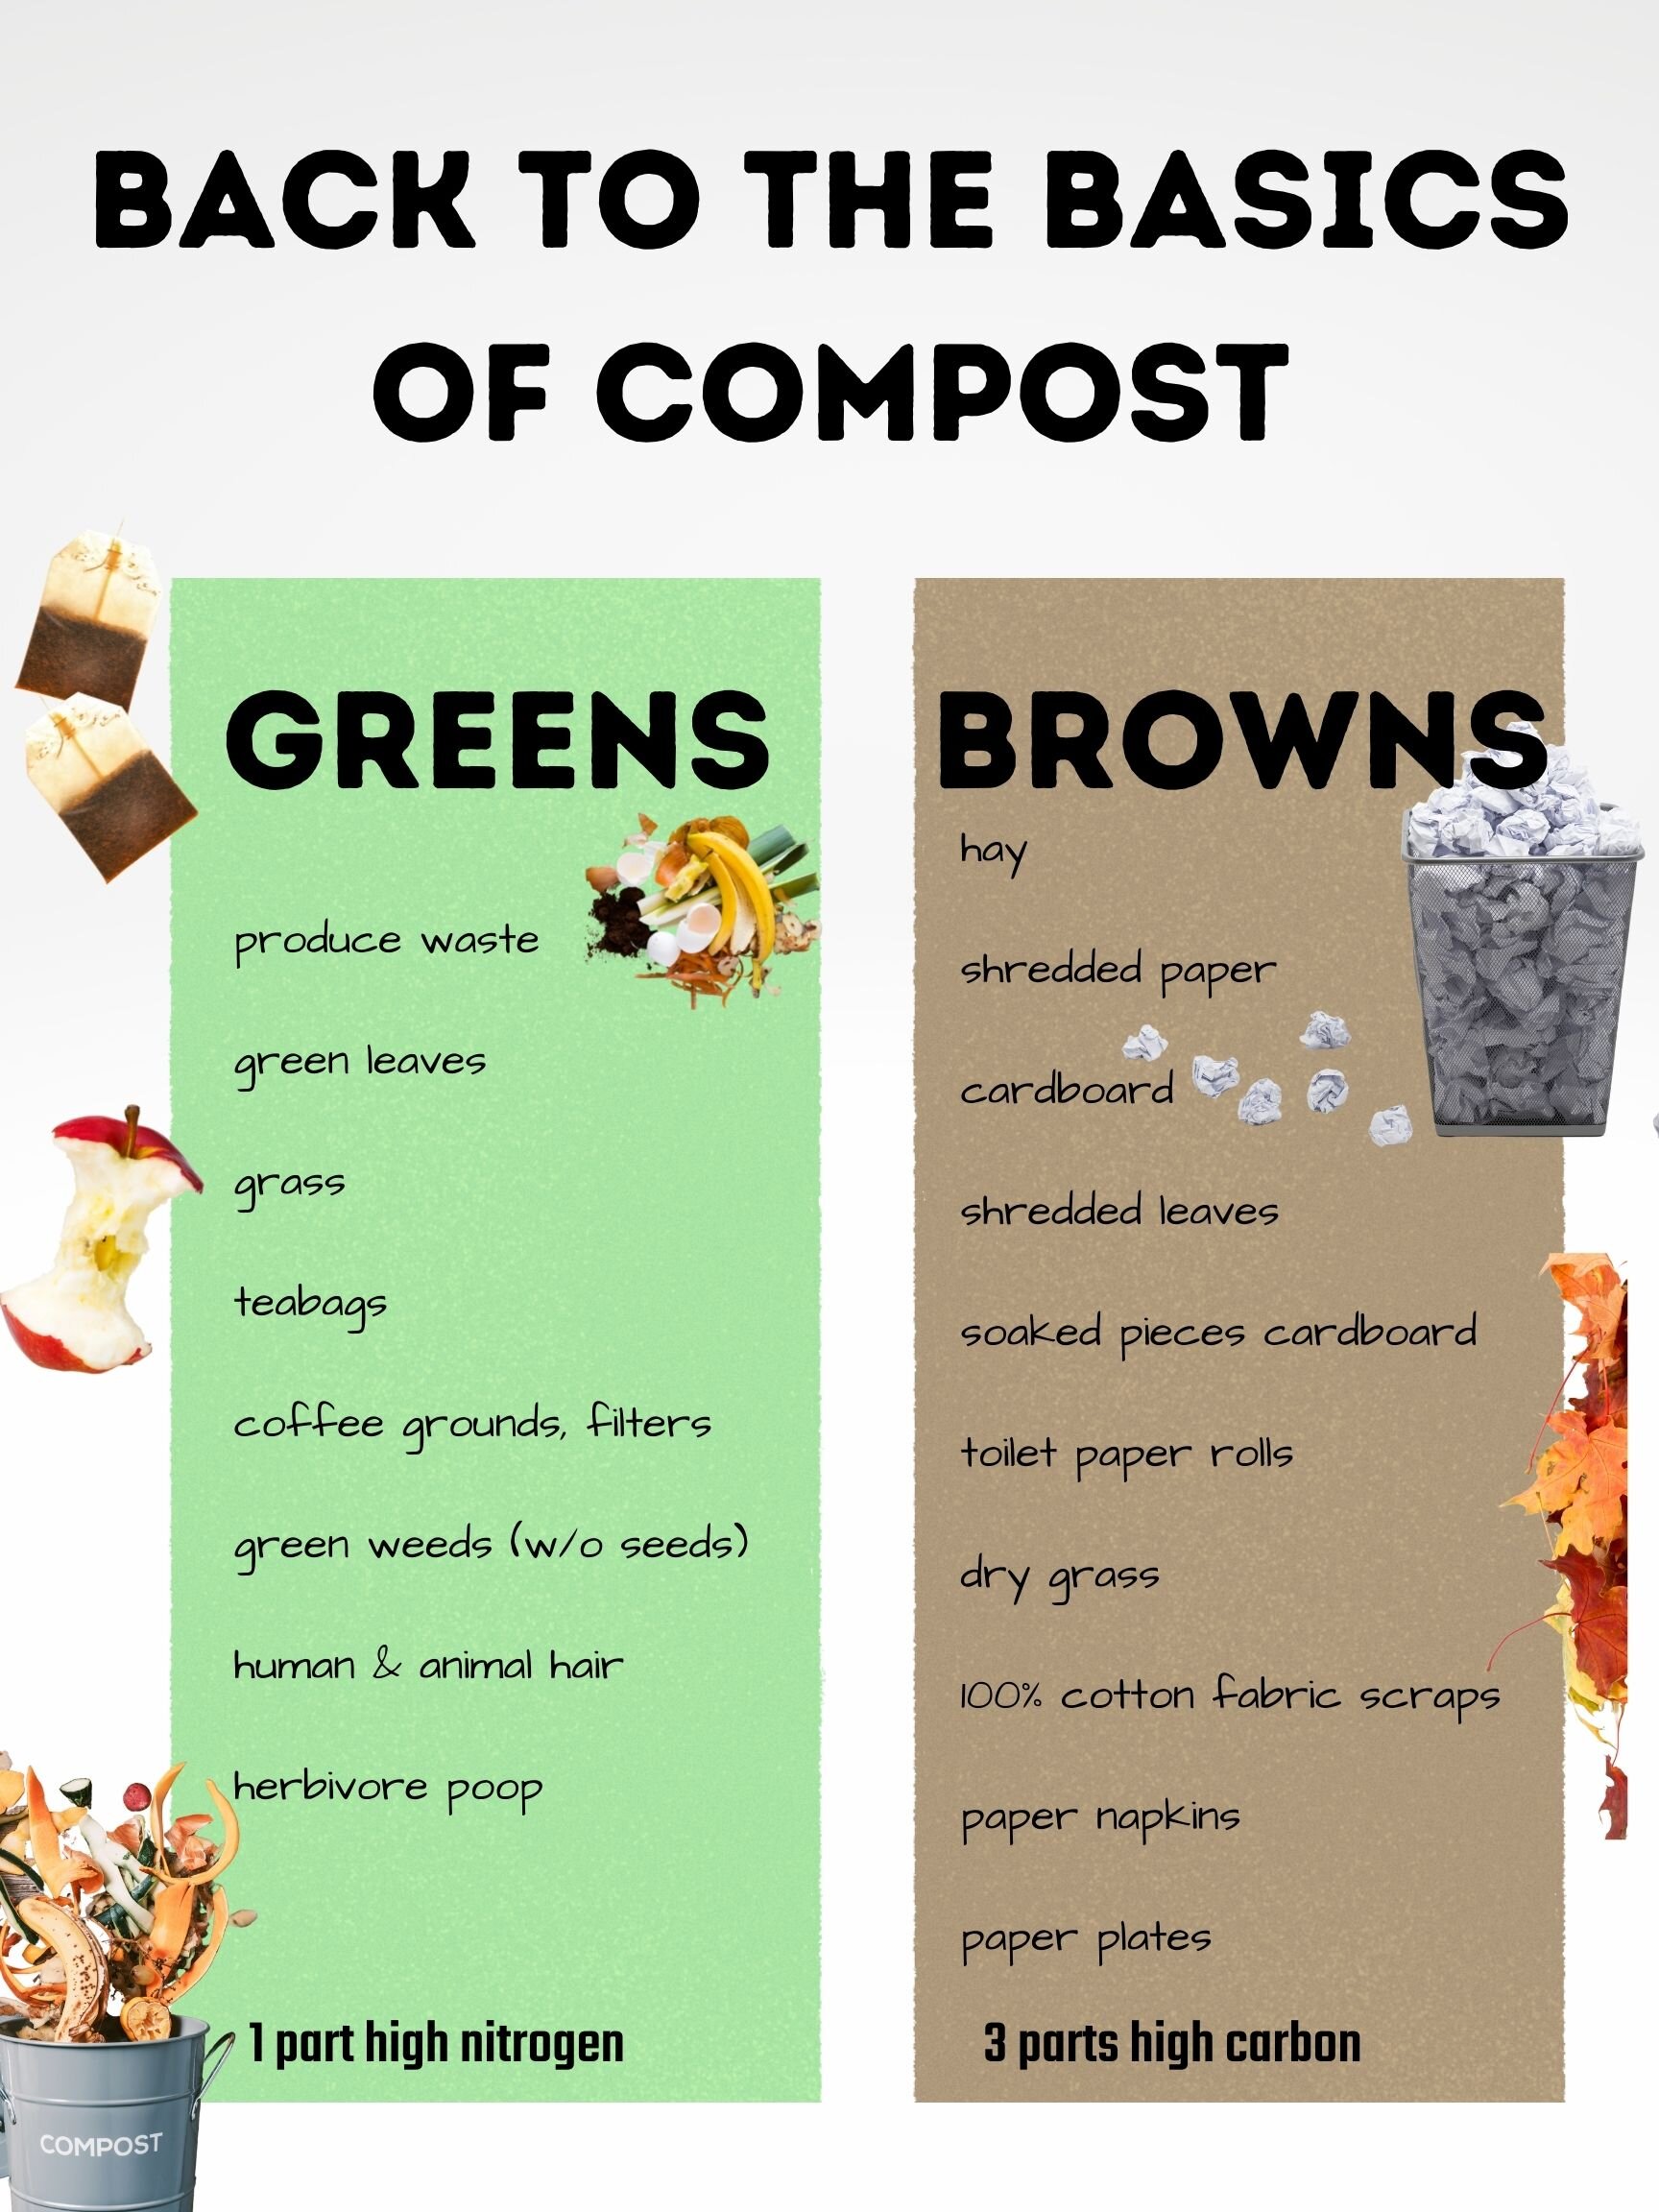 II. Benefits of Composting